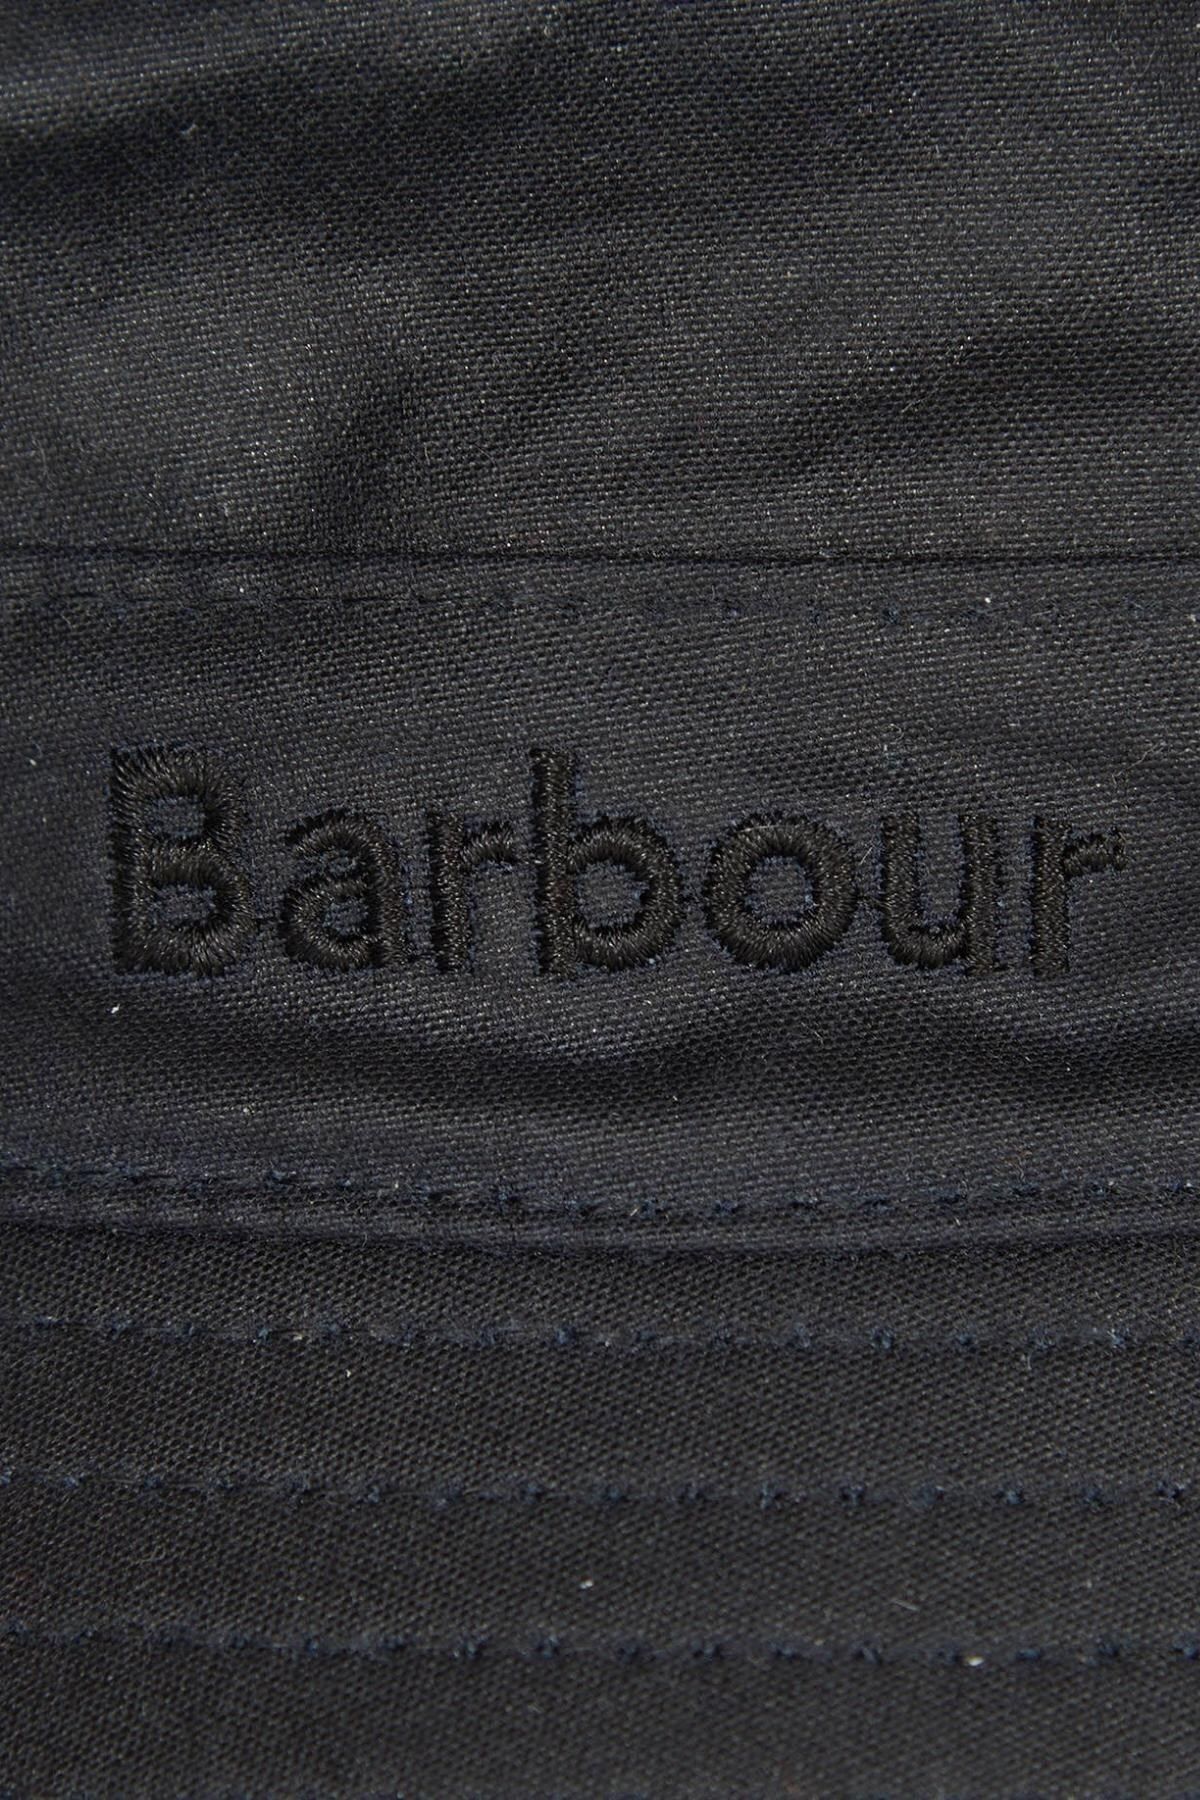 Barbour کلاه ورزشی نفتی NY91 نیروی دریایی